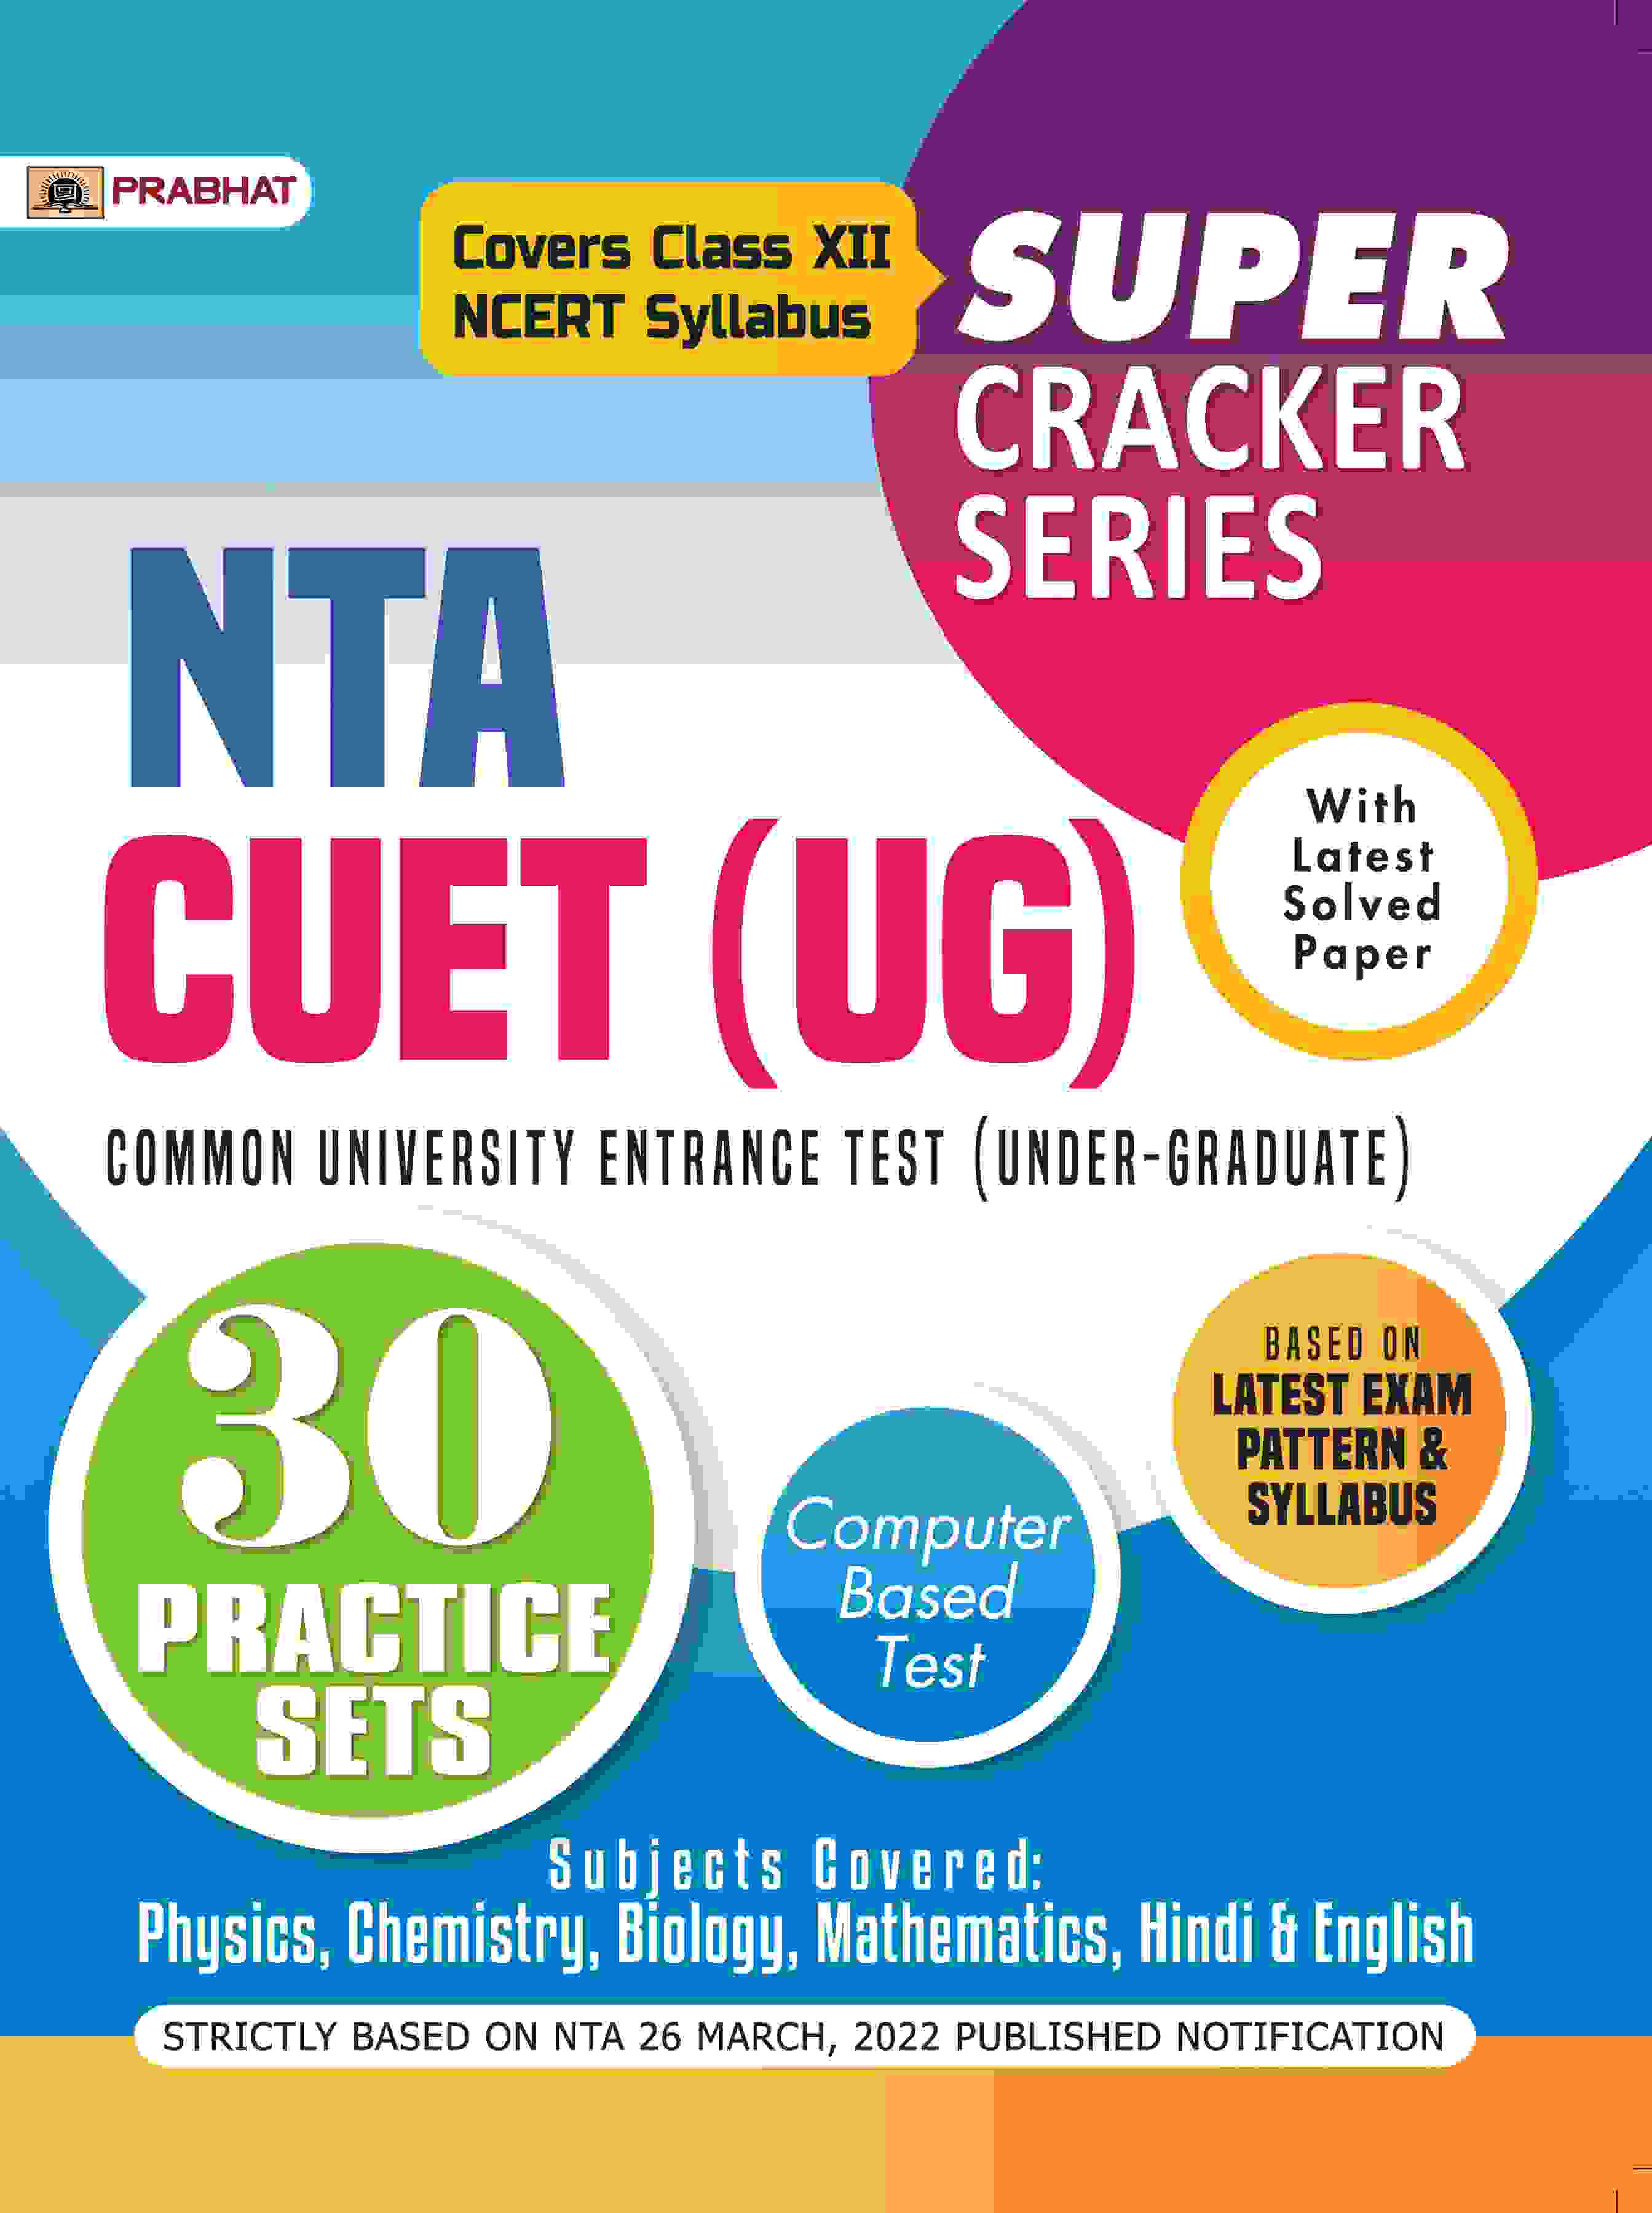 (Super Cracker Series) NTA CUET UG Physics, Chemistry, Mathematics and Biology CBT 30 Practice Sets (Hindi & English)